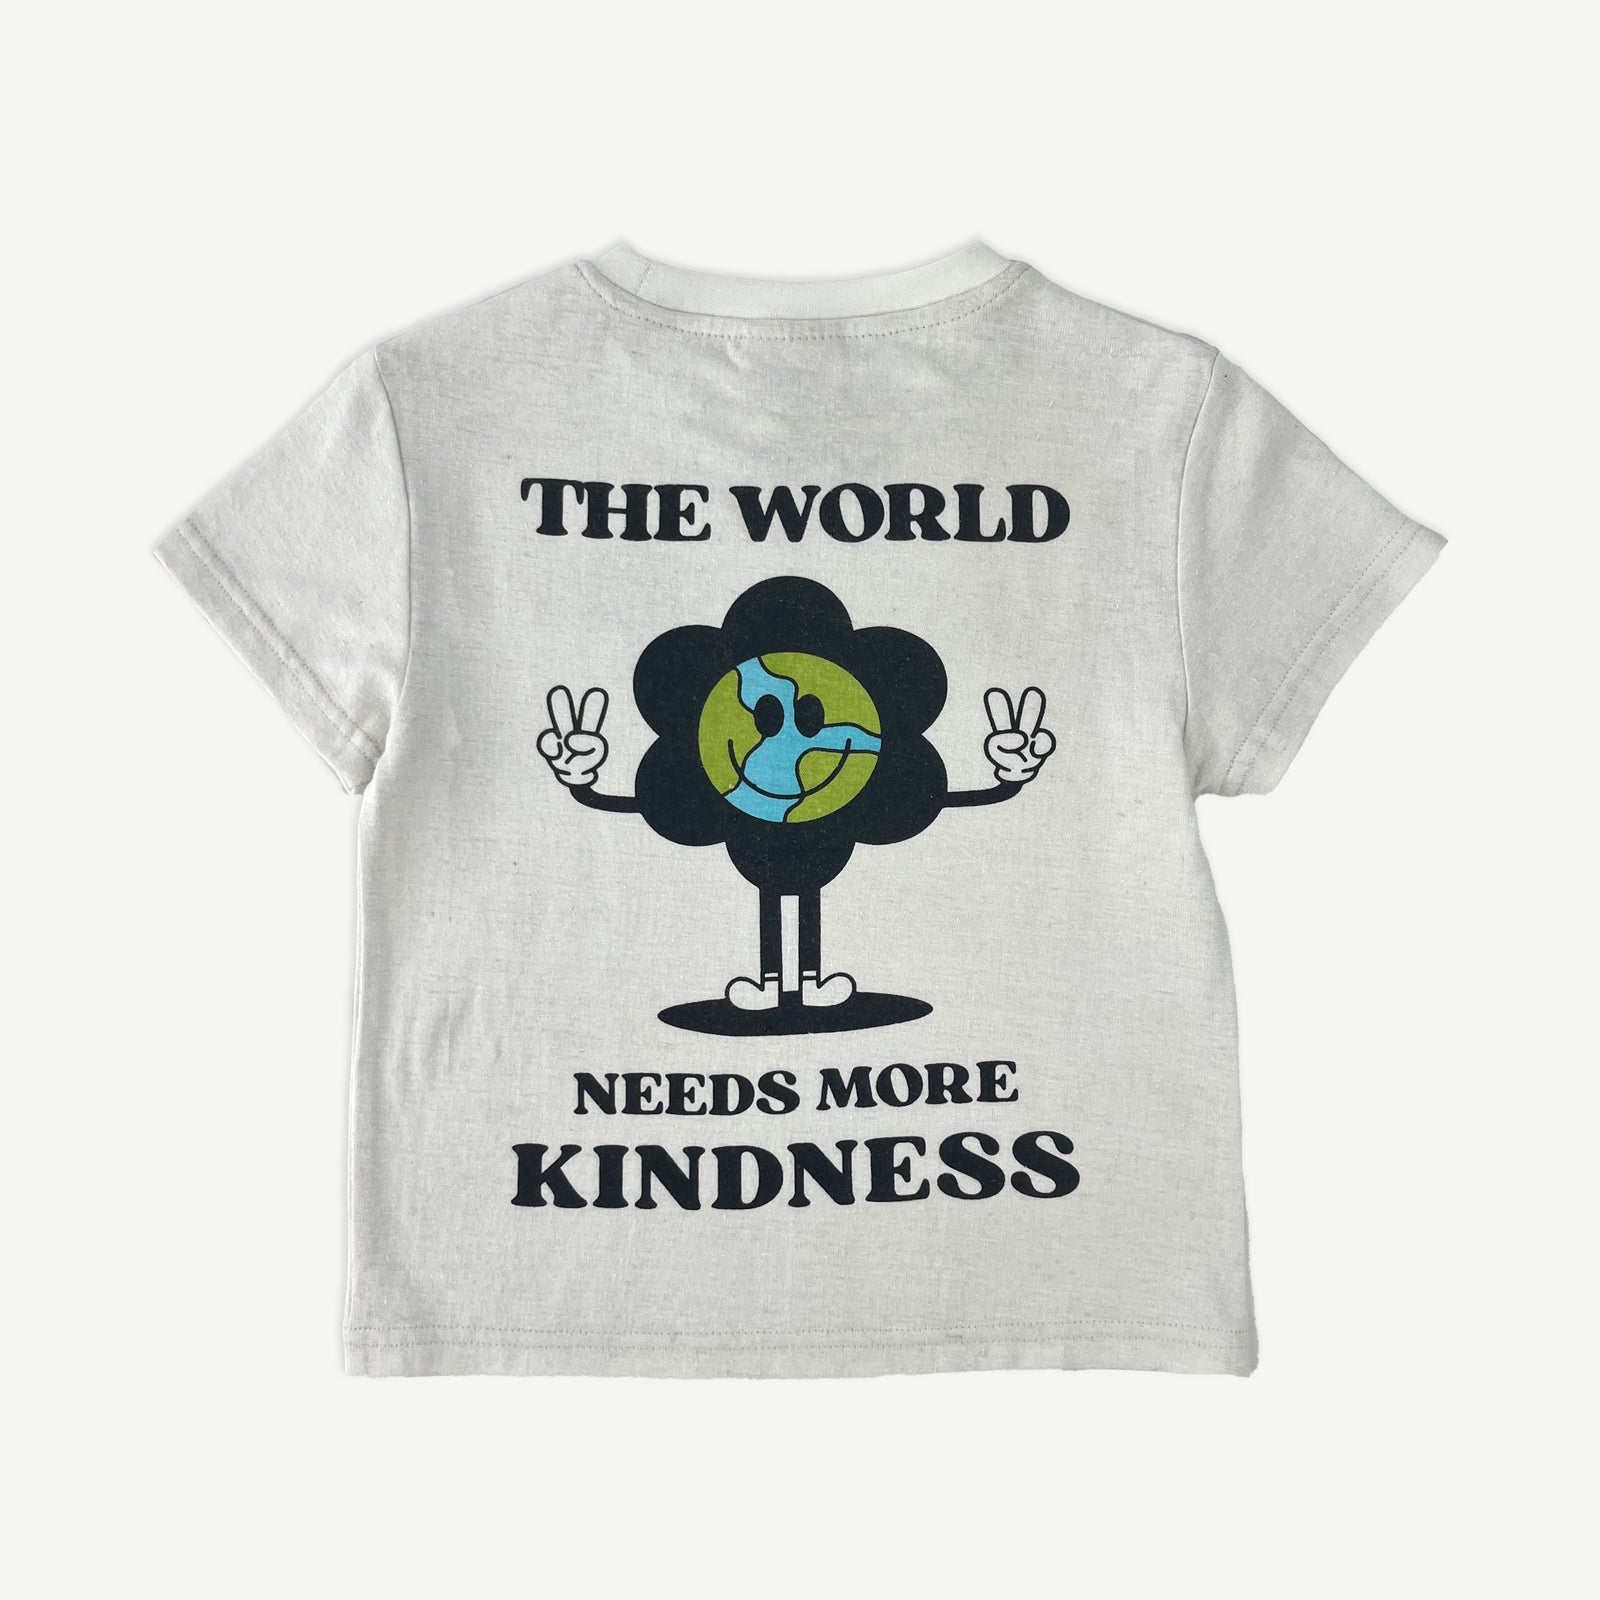 The World Needs Kindness Hemp Tee - Kids